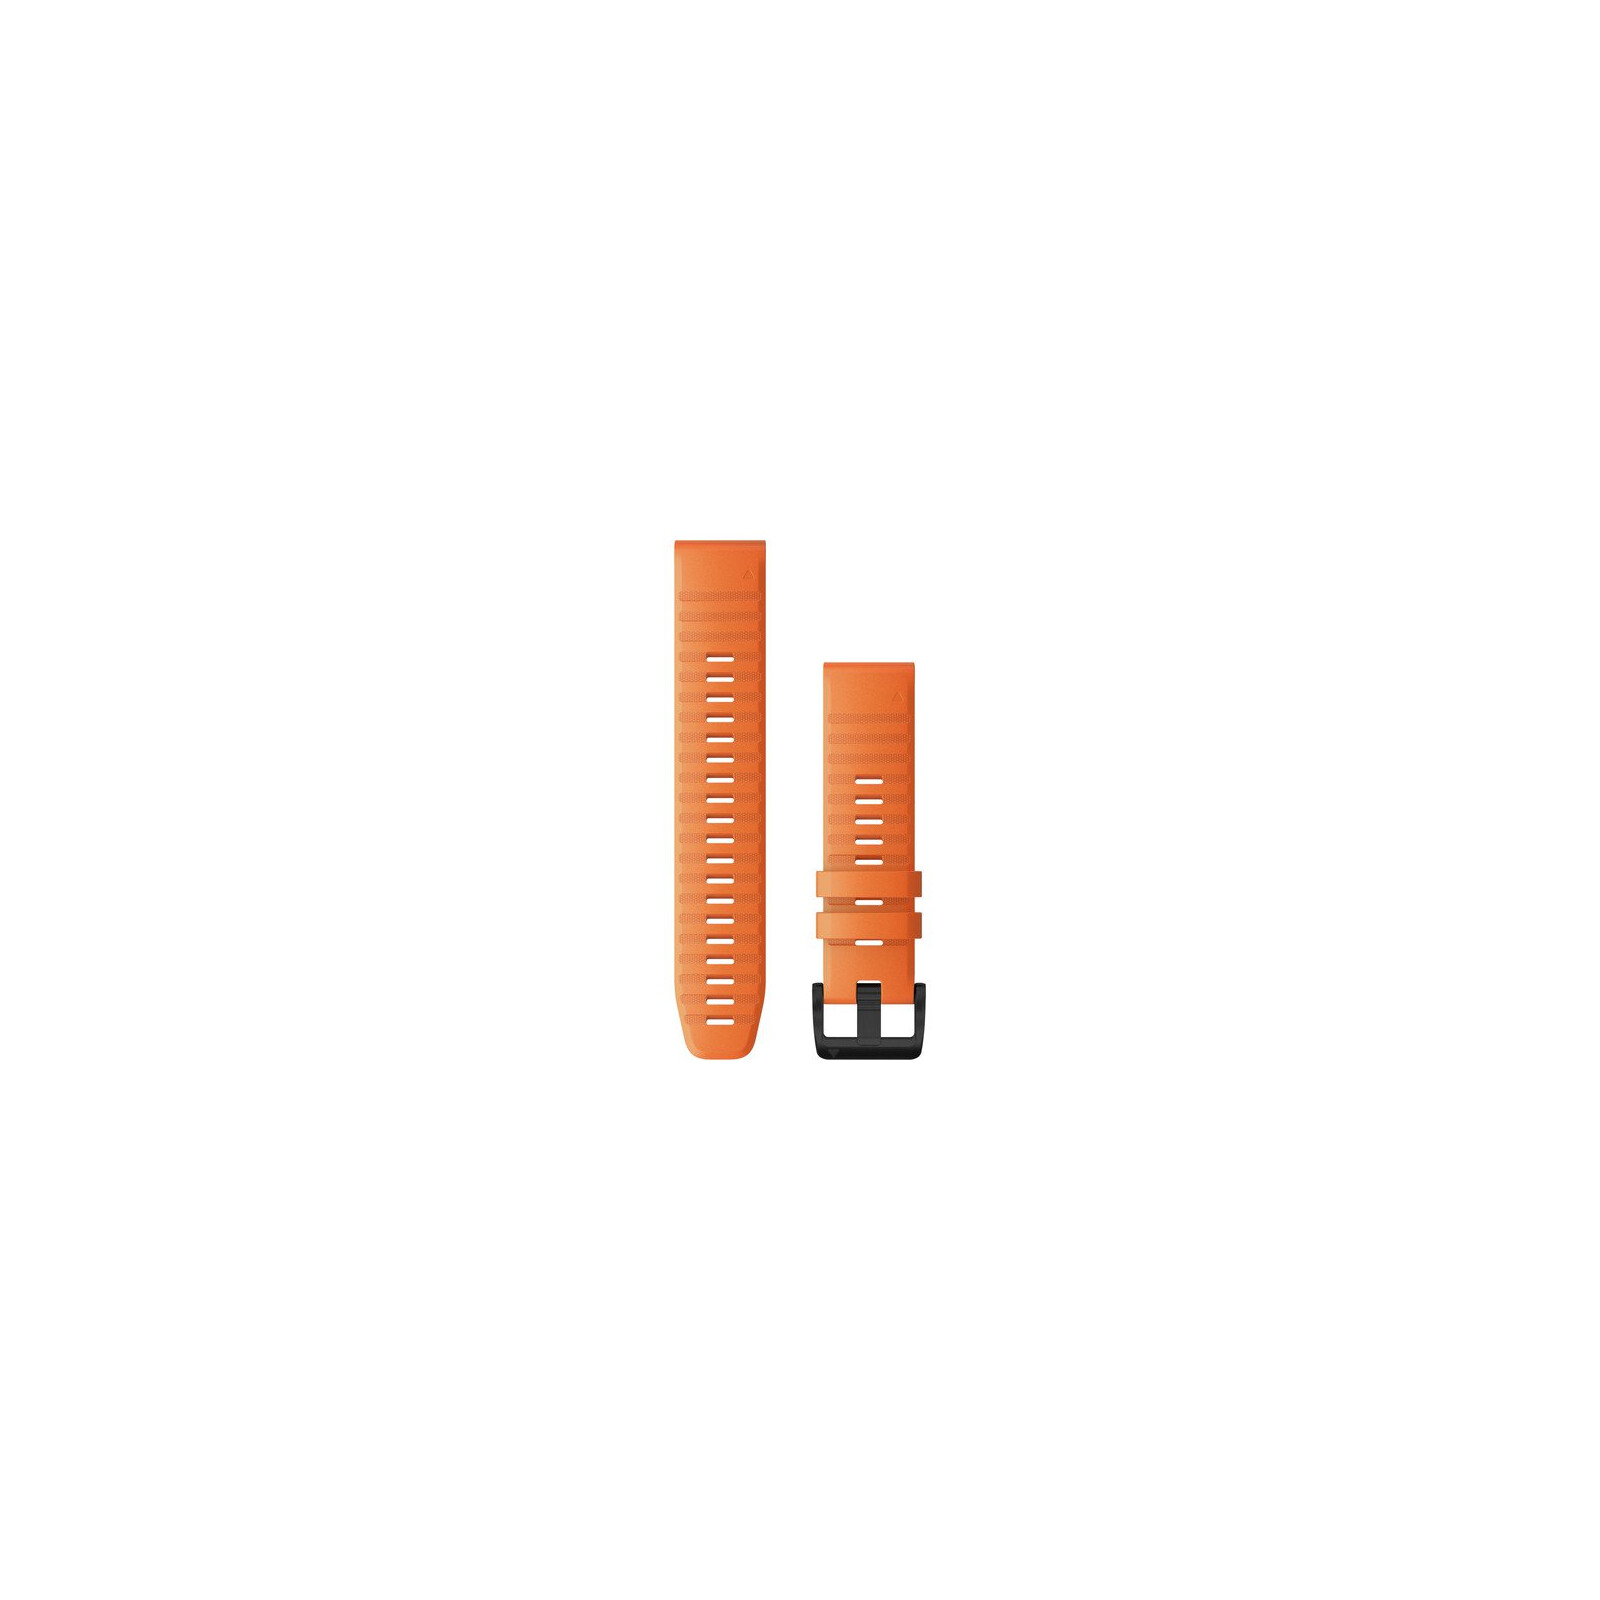 Garmin QuickFit 22 Uhrenband Silikon Ember Orange